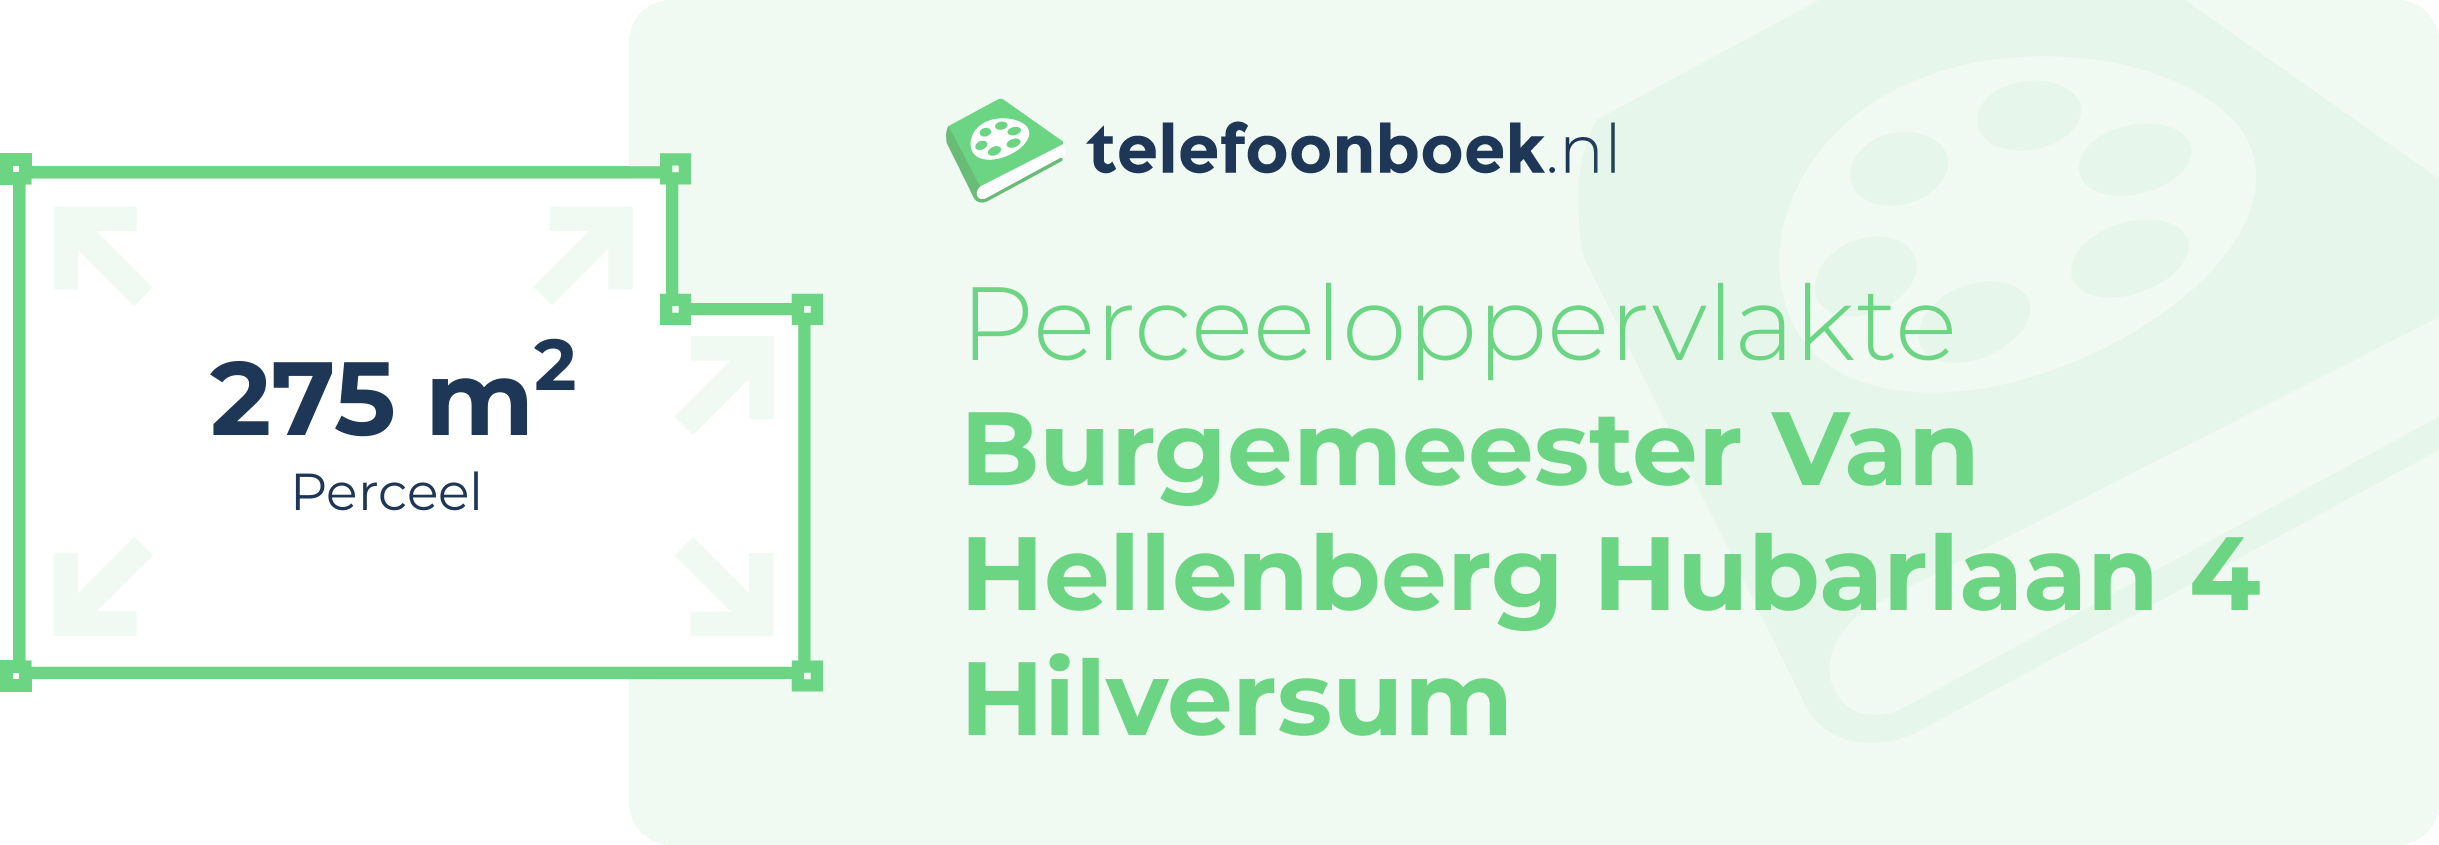 Perceeloppervlakte Burgemeester Van Hellenberg Hubarlaan 4 Hilversum